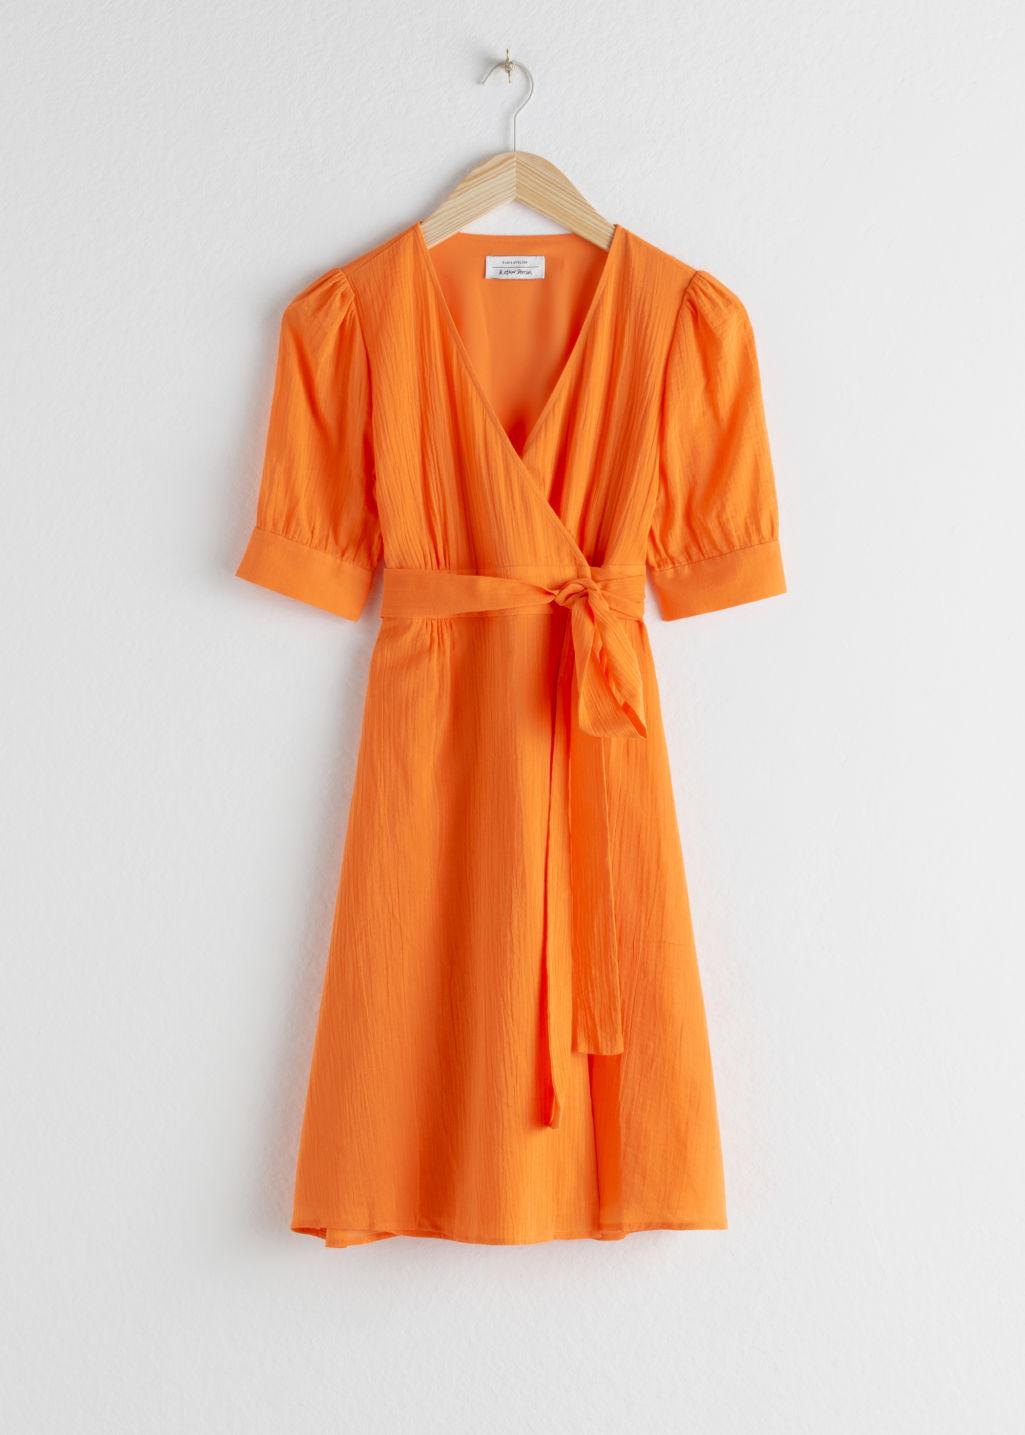 \u0026 Other Stories Cotton Blend Wrap Mini Dress in Orange - Lyst